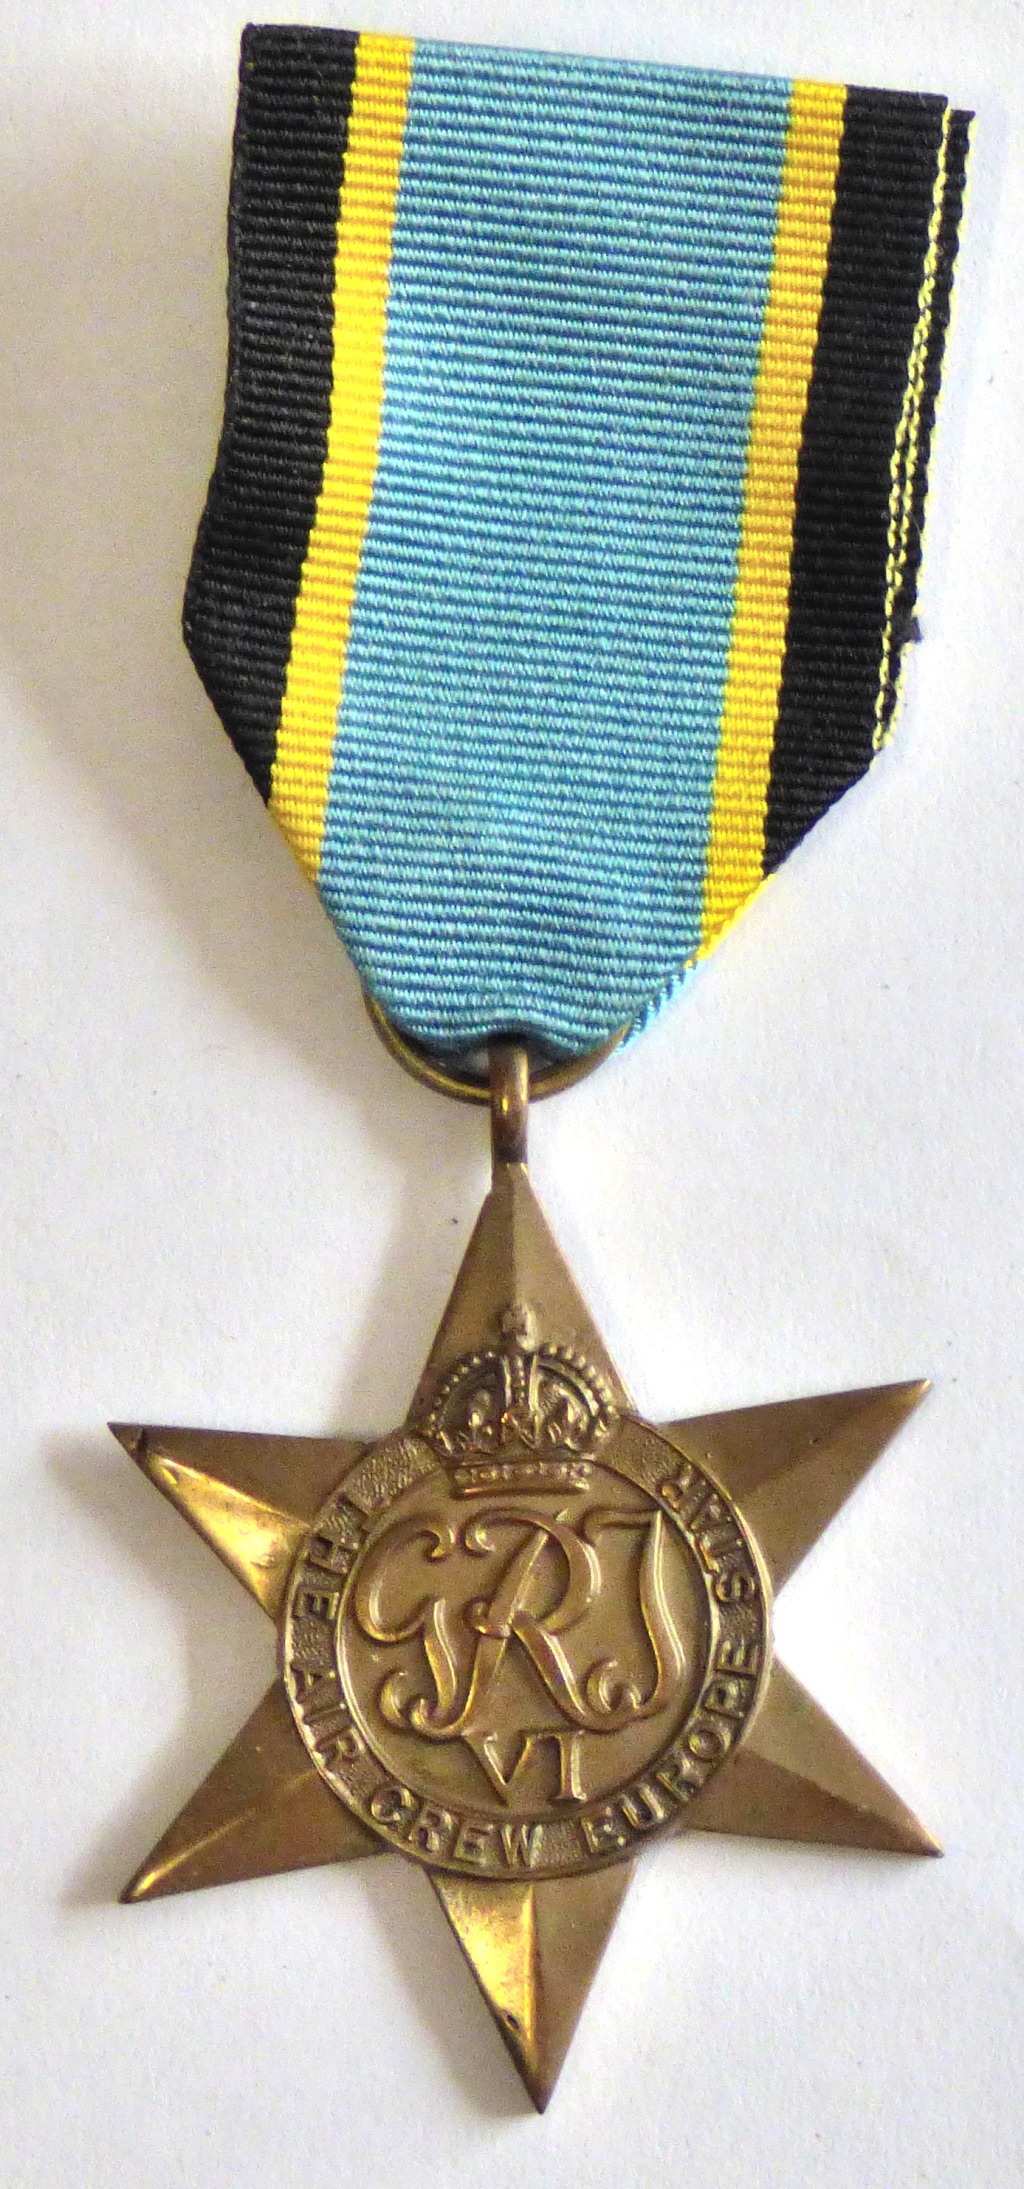 British WWII Air Crew Europe Star - A nice original piece. A scarce medal